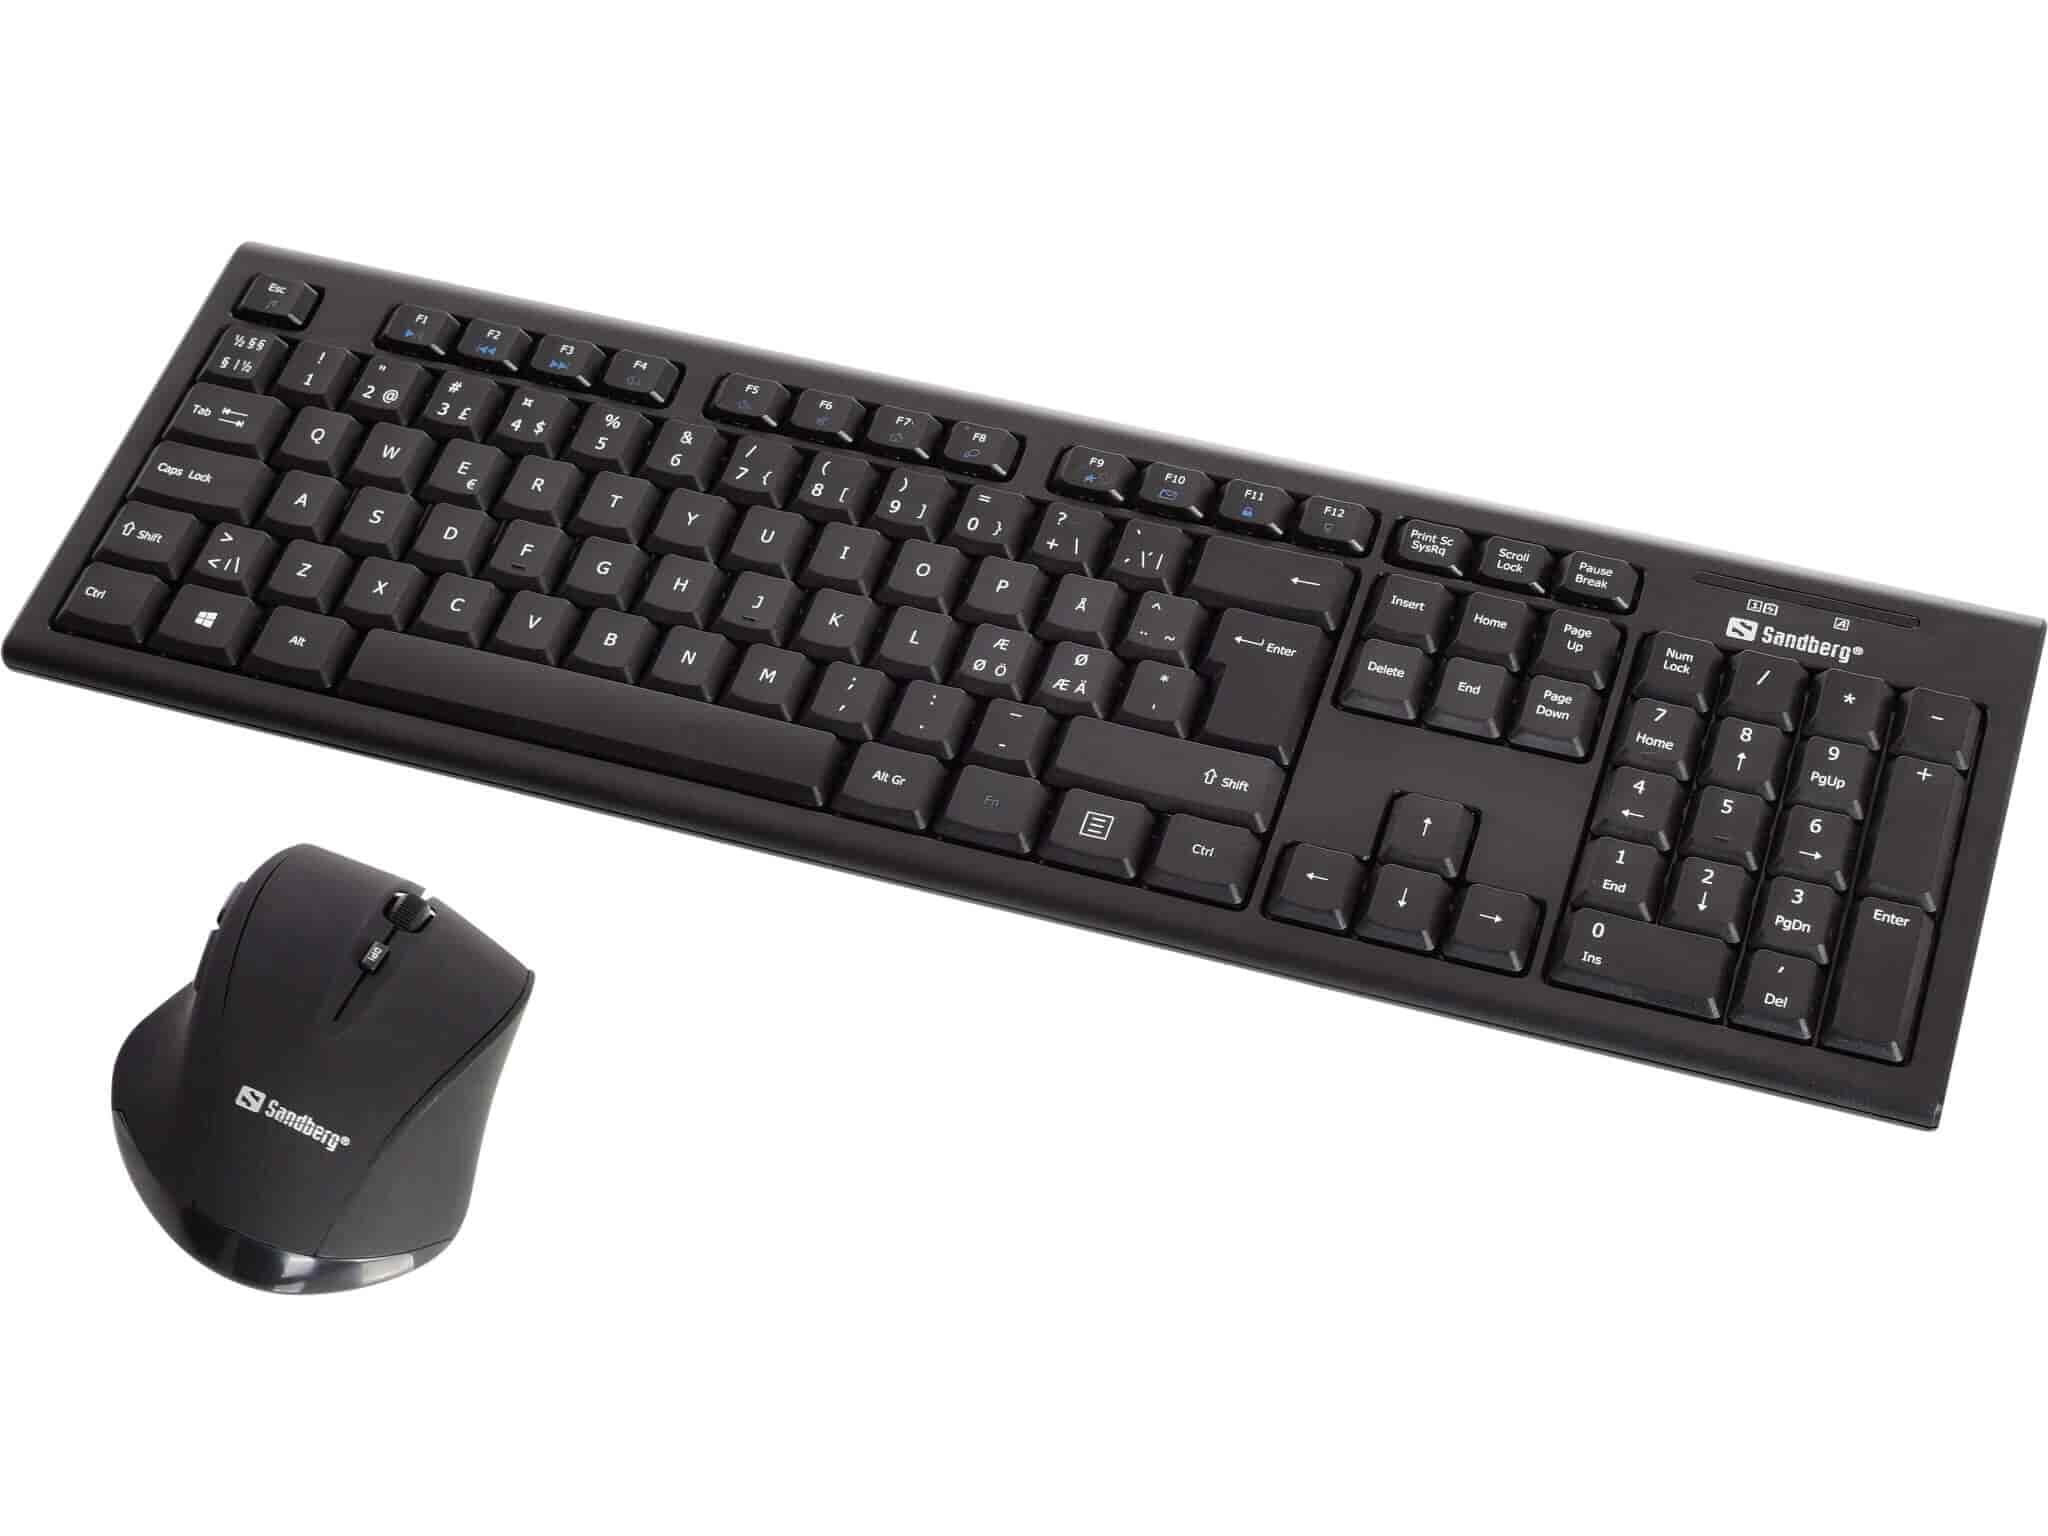 Wireless Office DesktopSet Nordic, trådløs mus og tastatur til kontoret,Sandberg